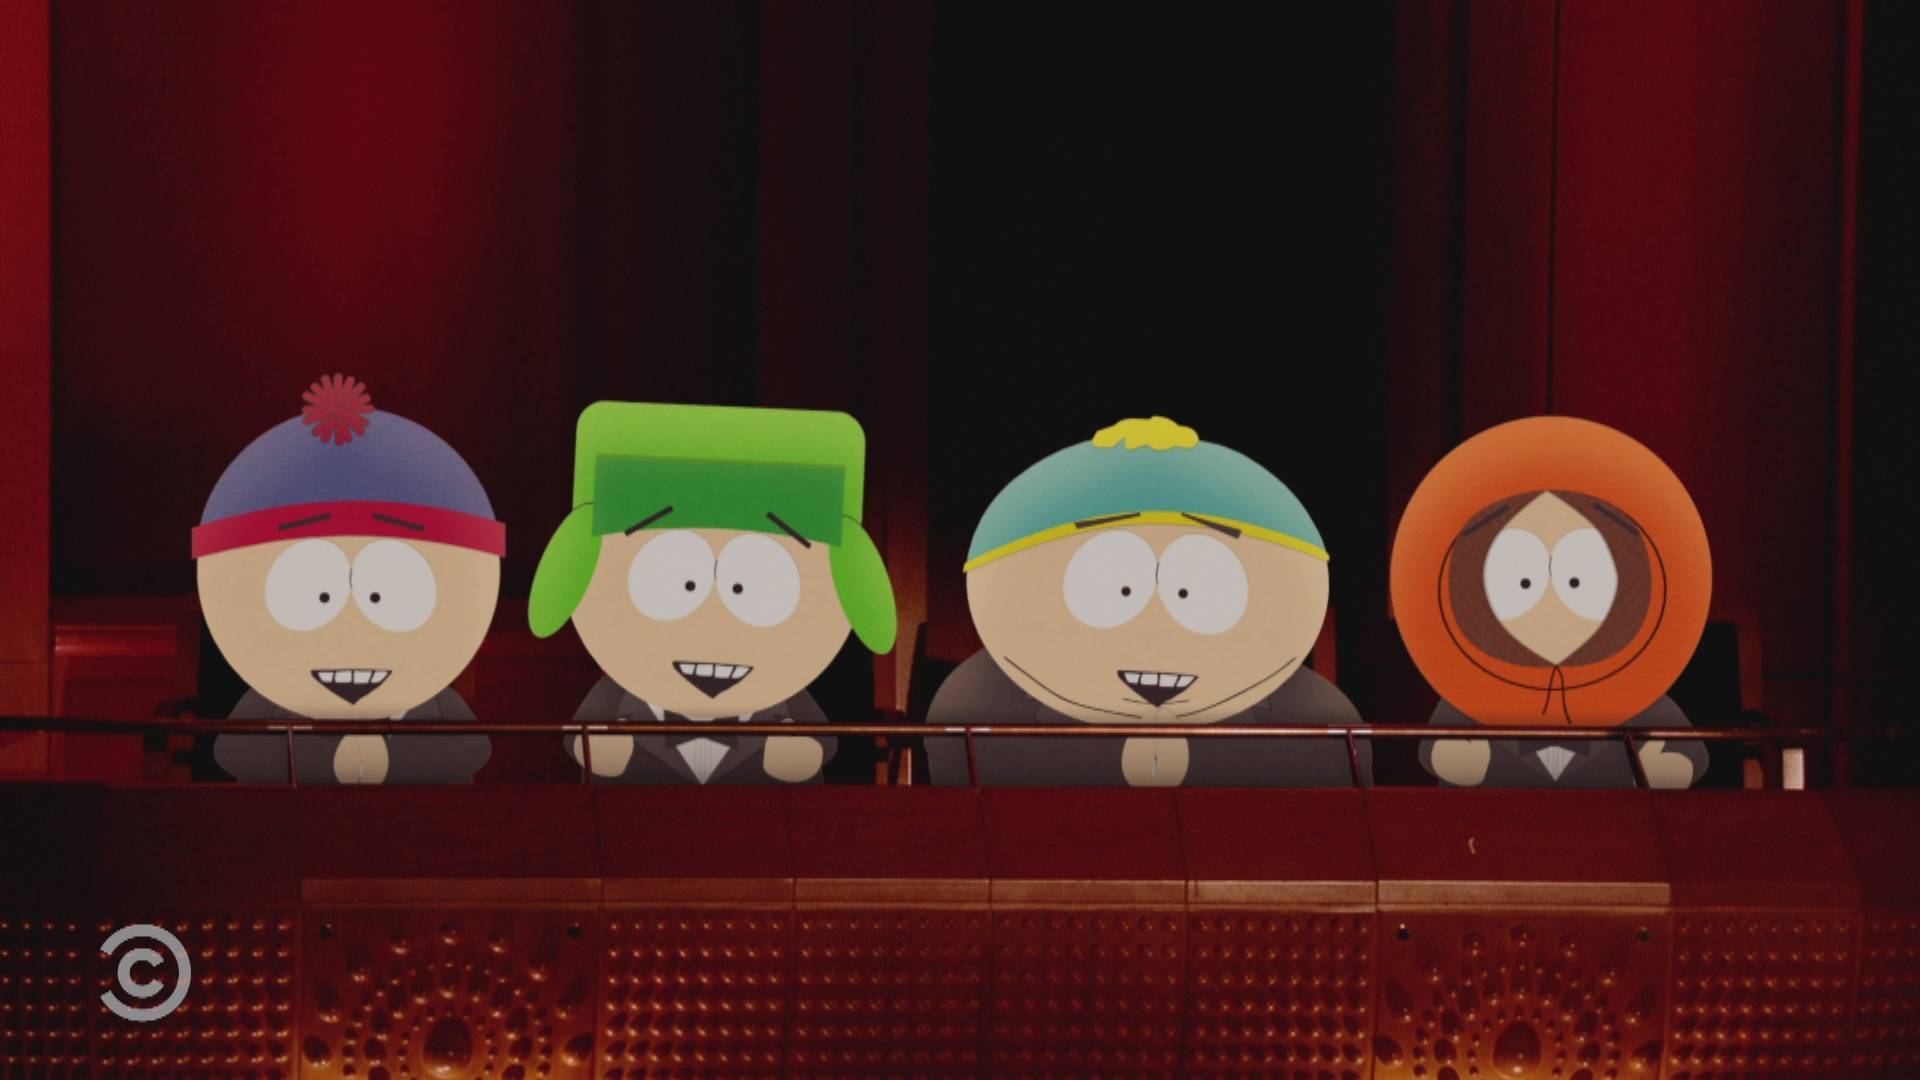 South Park - TV Series